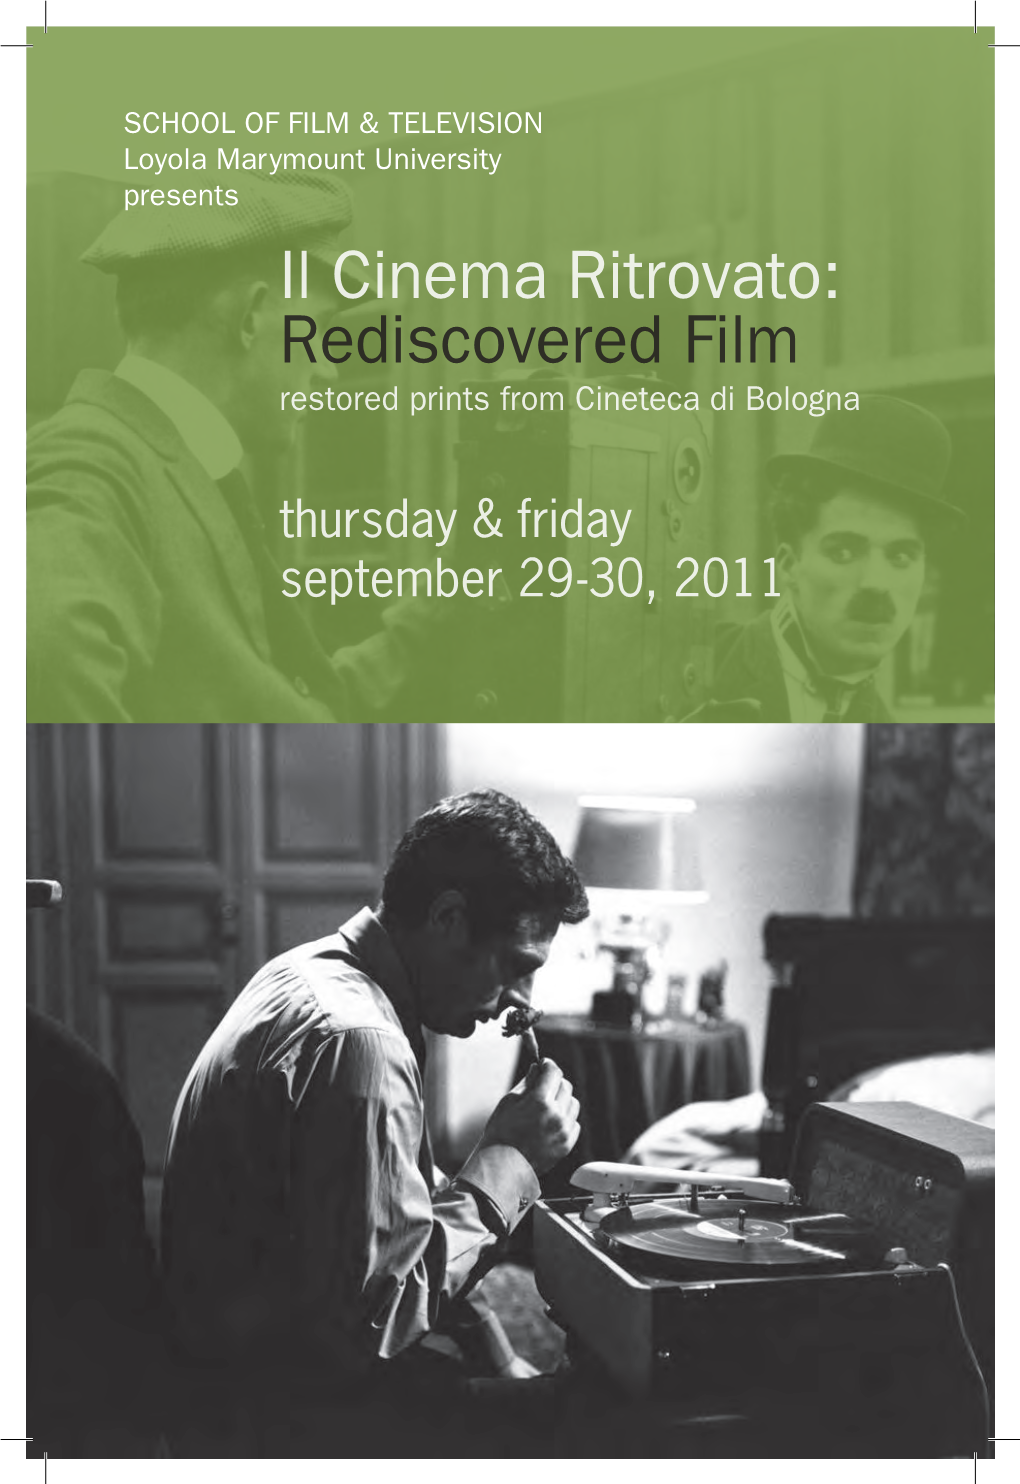 Rediscovered Film Restored Prints from Cineteca Di Bologna